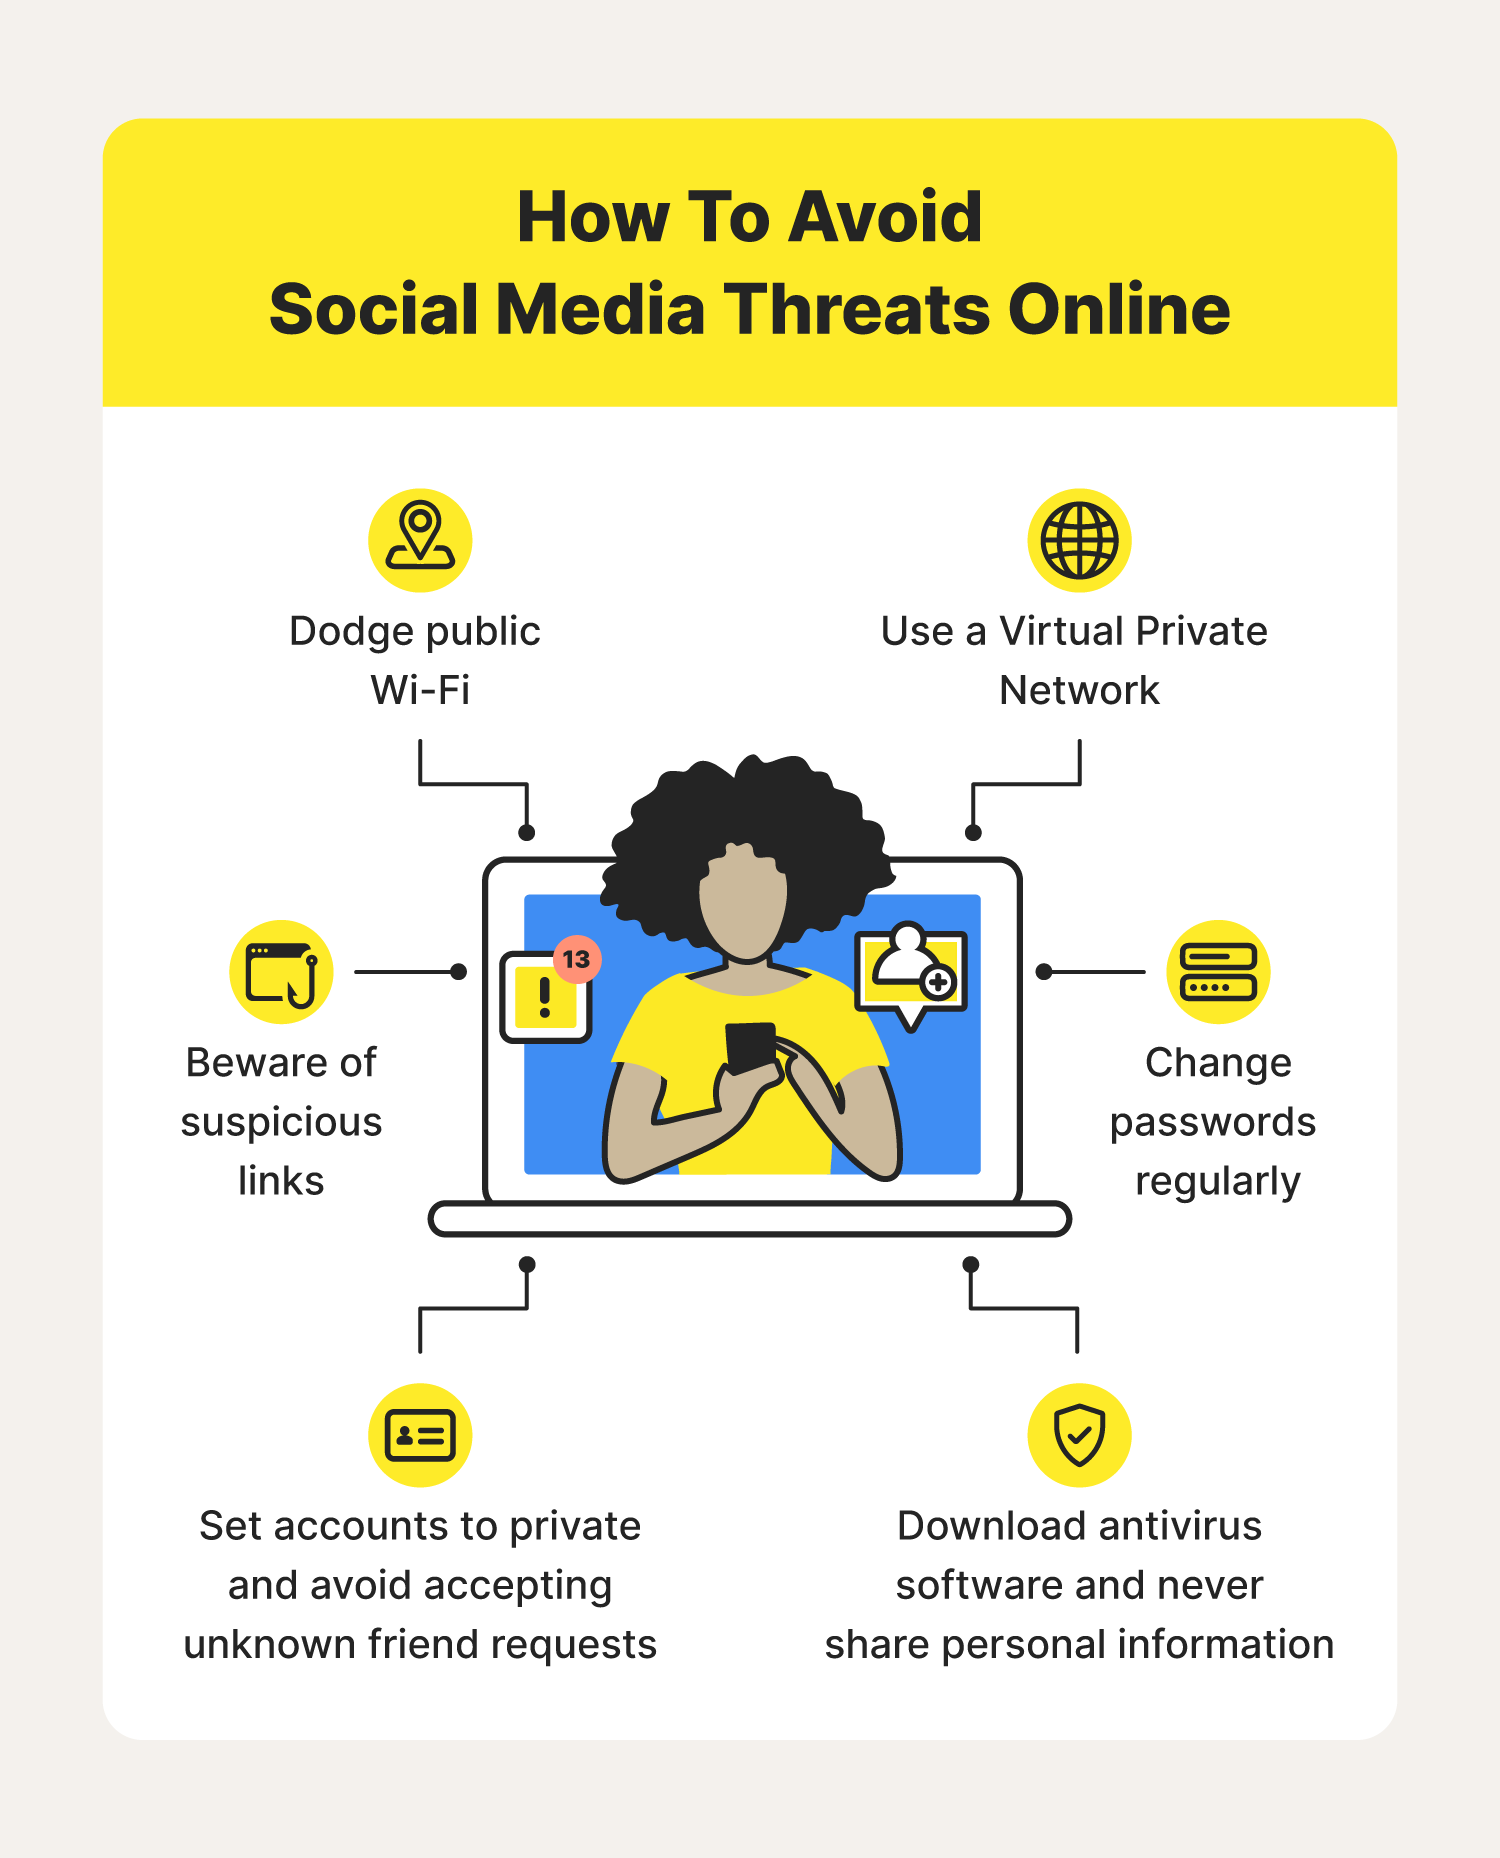 How to avoid social media threats online